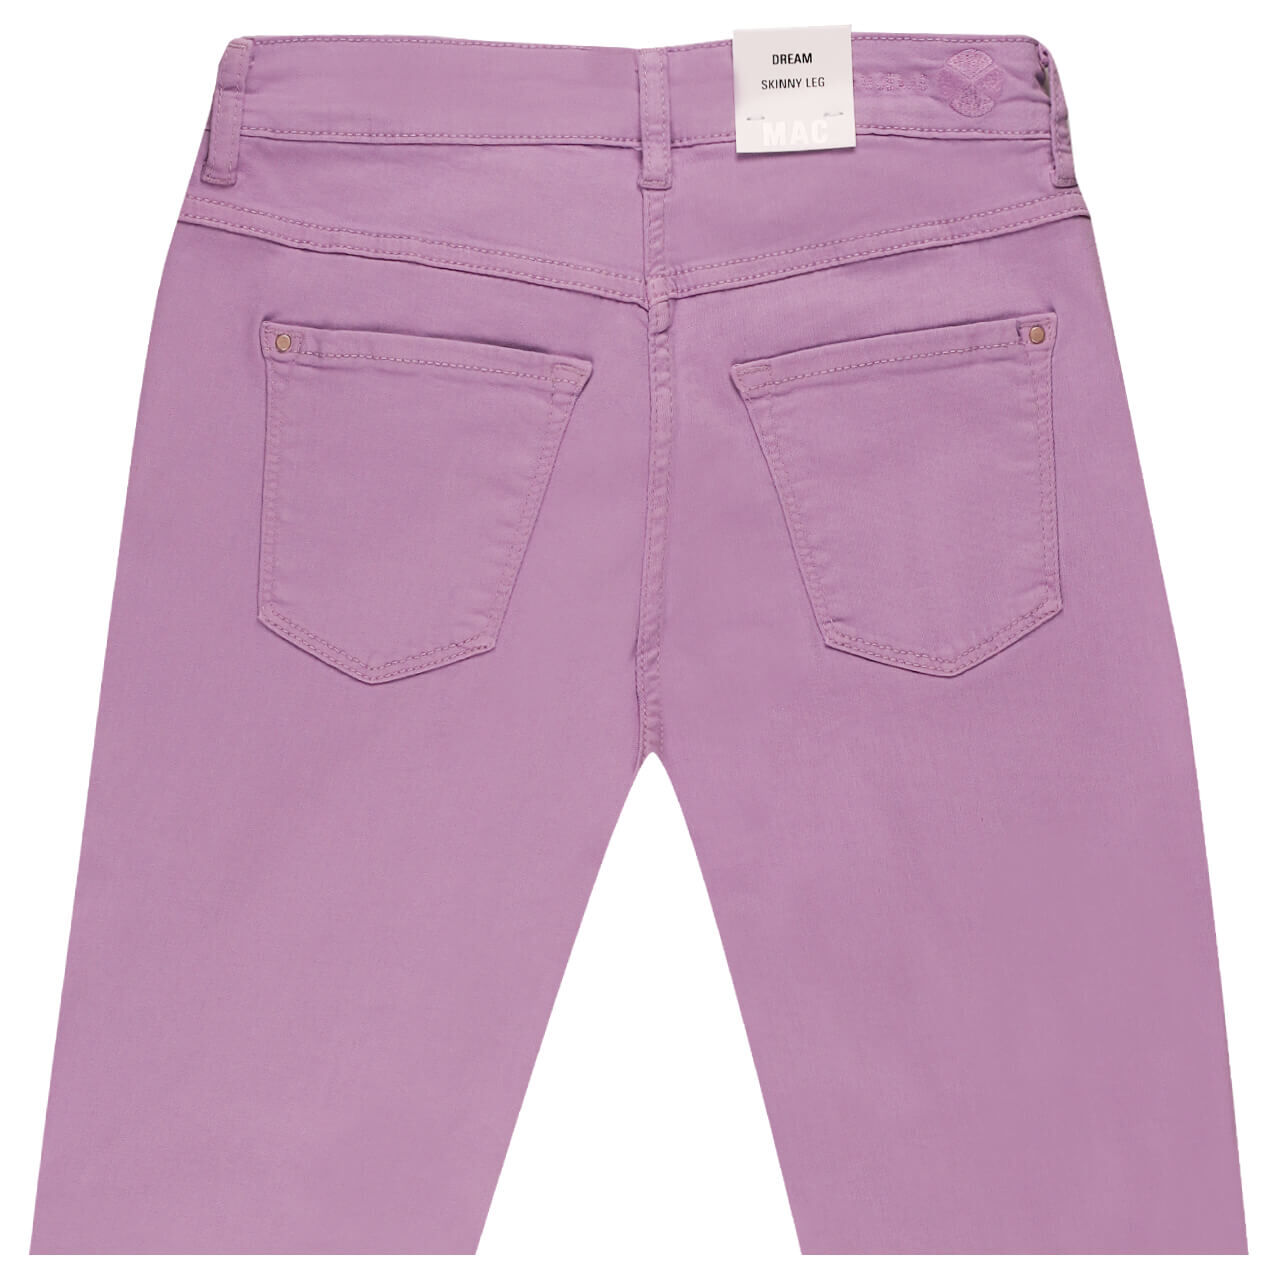 MAC Dream Skinny Jeans lavender